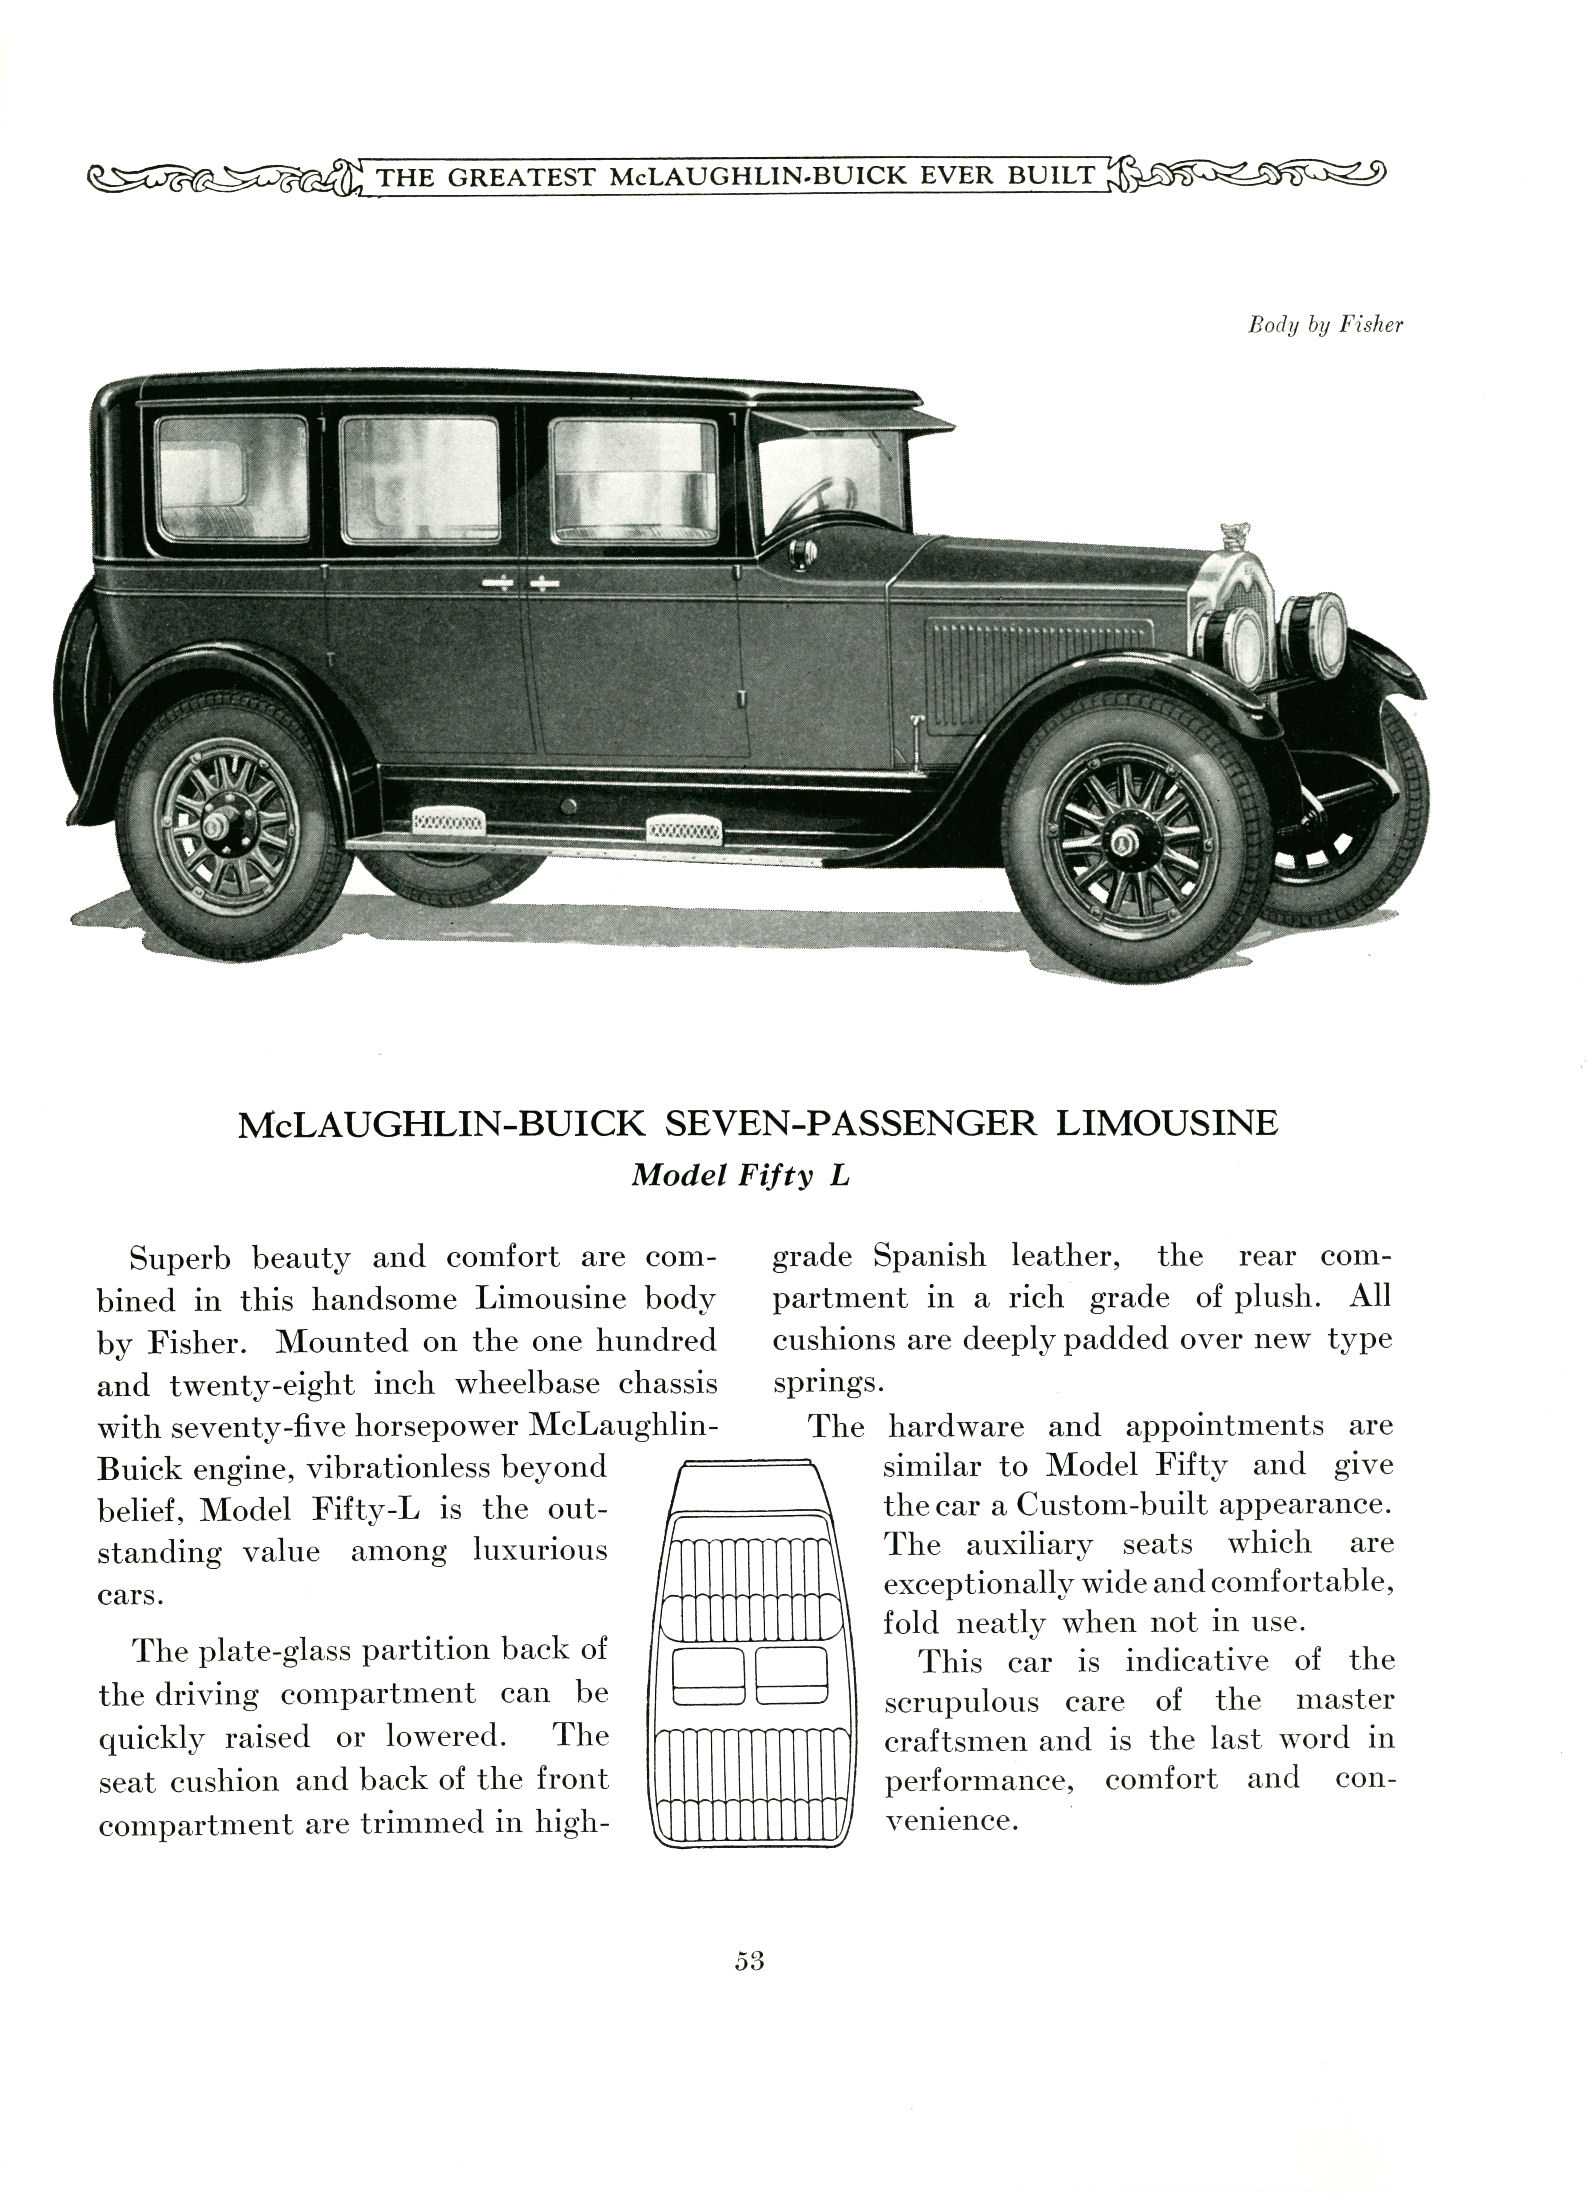 1930 McLaughlin Buick Booklet-53